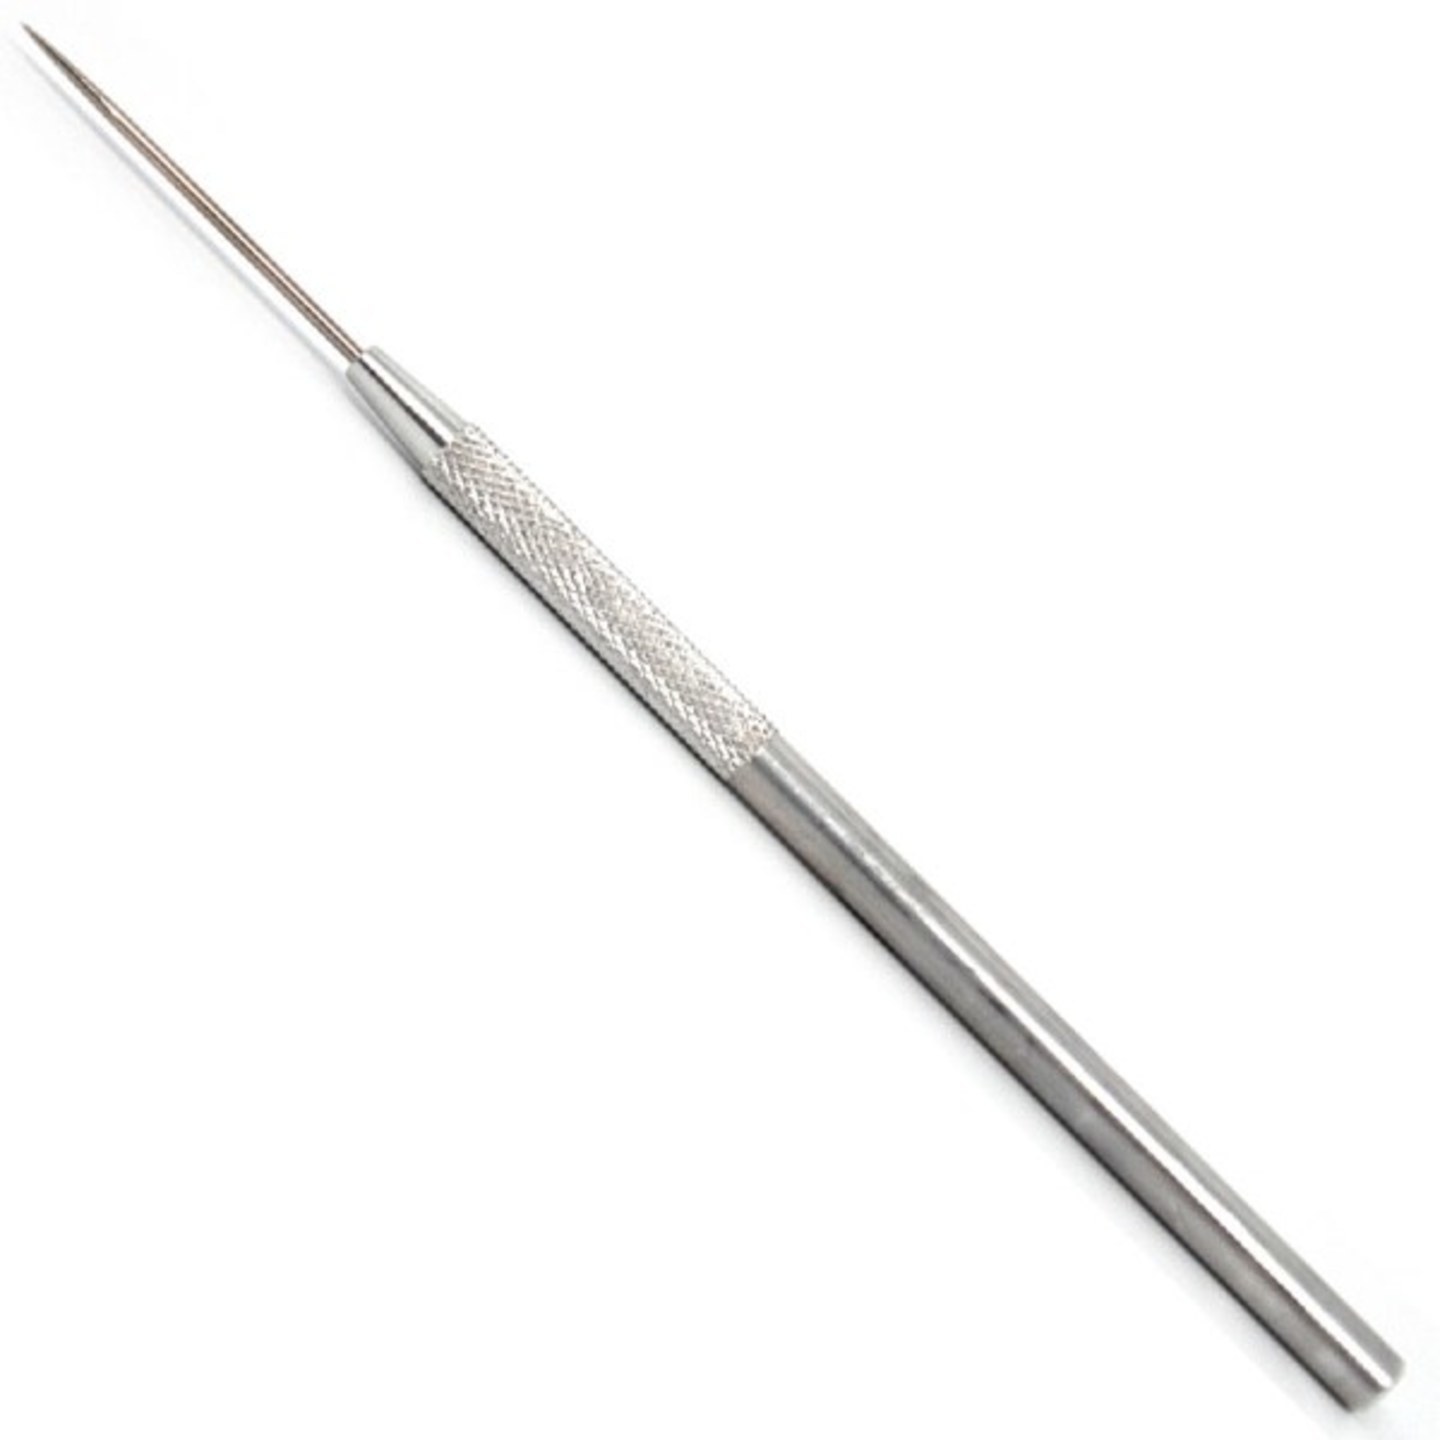 Clay Needle Tool Stainless Steel Metal